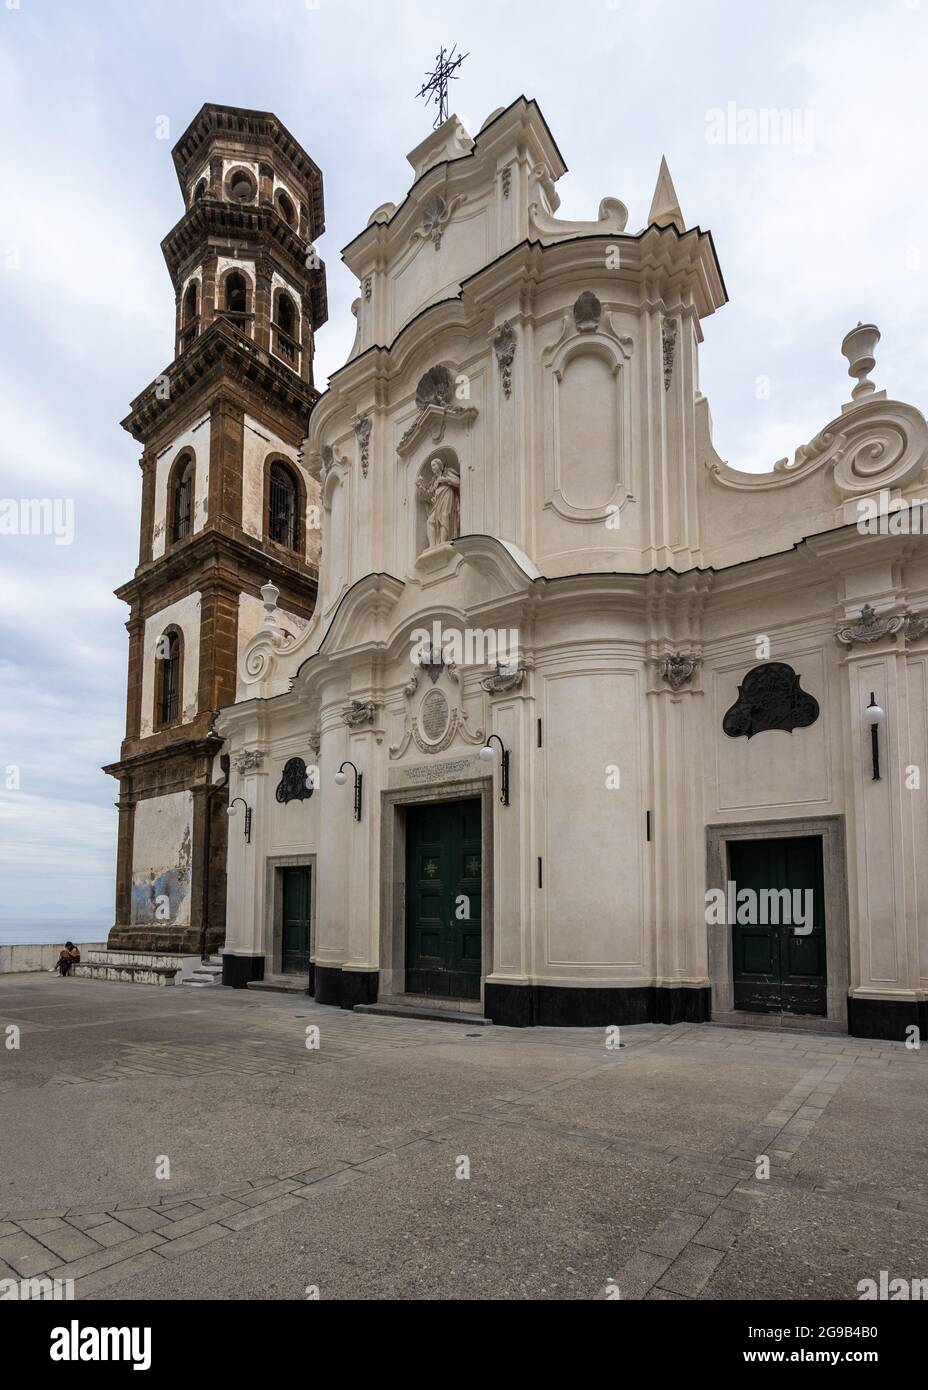 Facade of the Collegiate Church of Santa Maria Maddalena in Atrani, Amalfi Coast, Italy Stock Photo